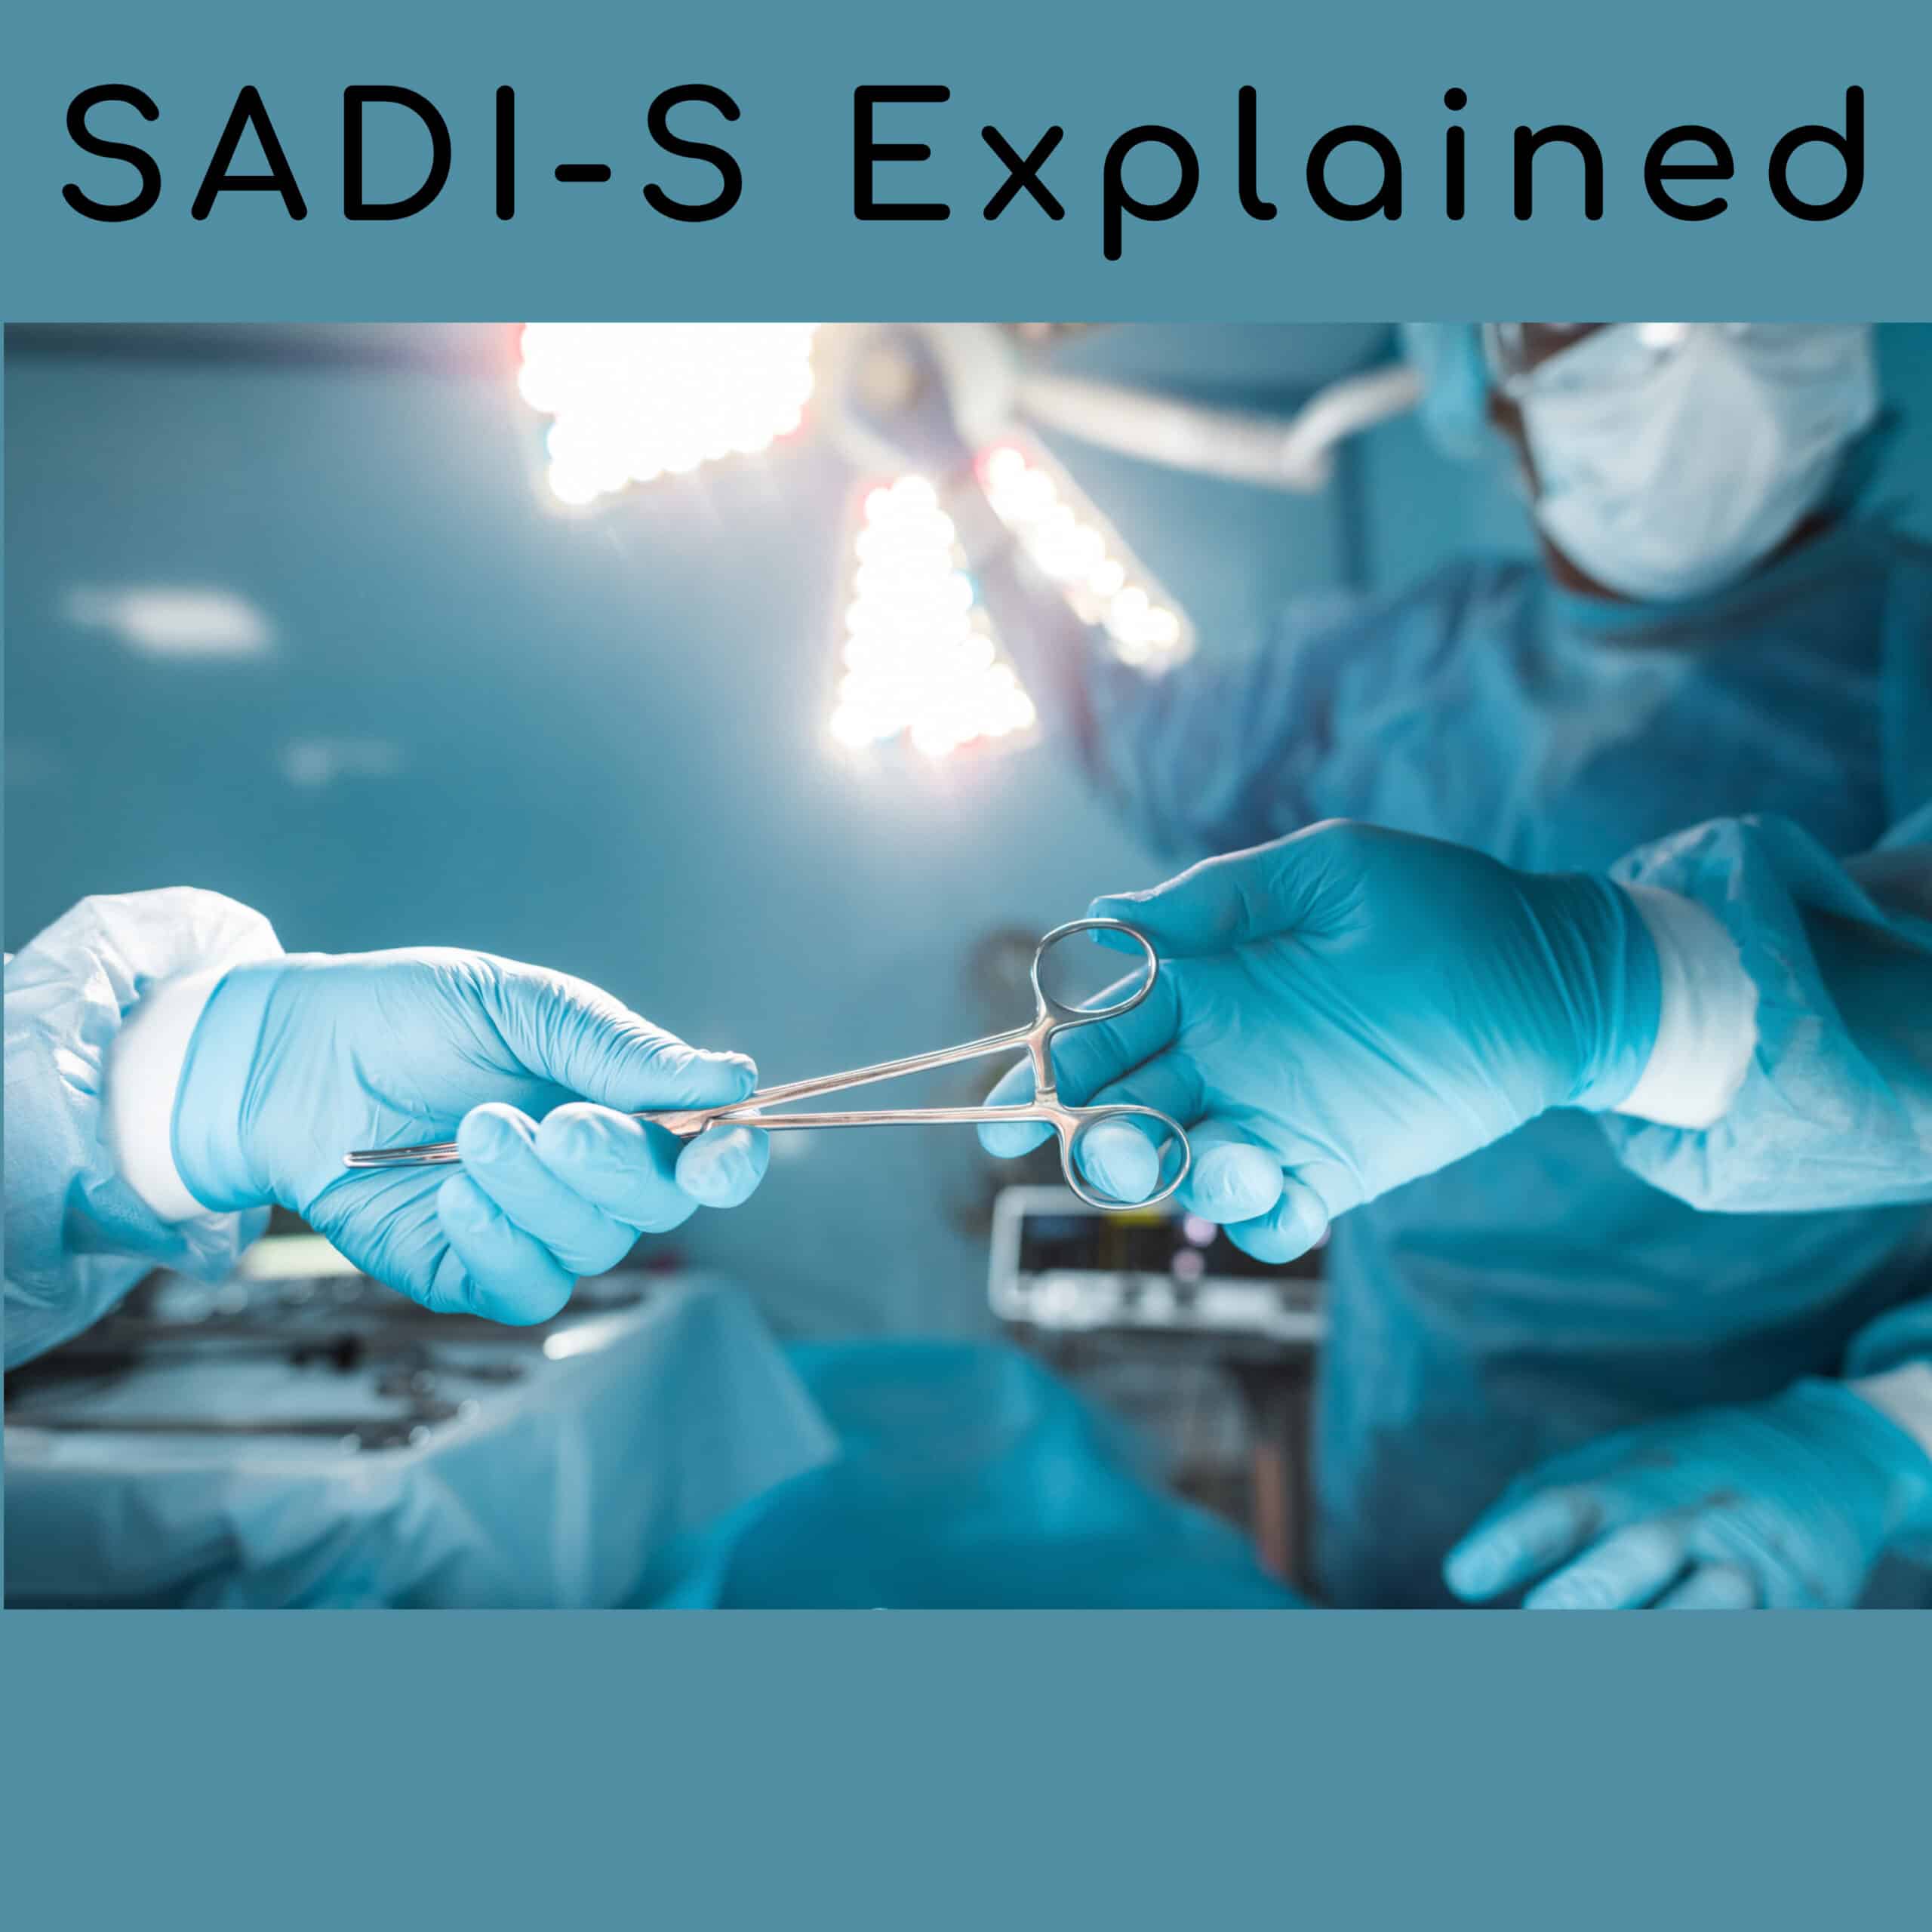 sadi-s surgery explained